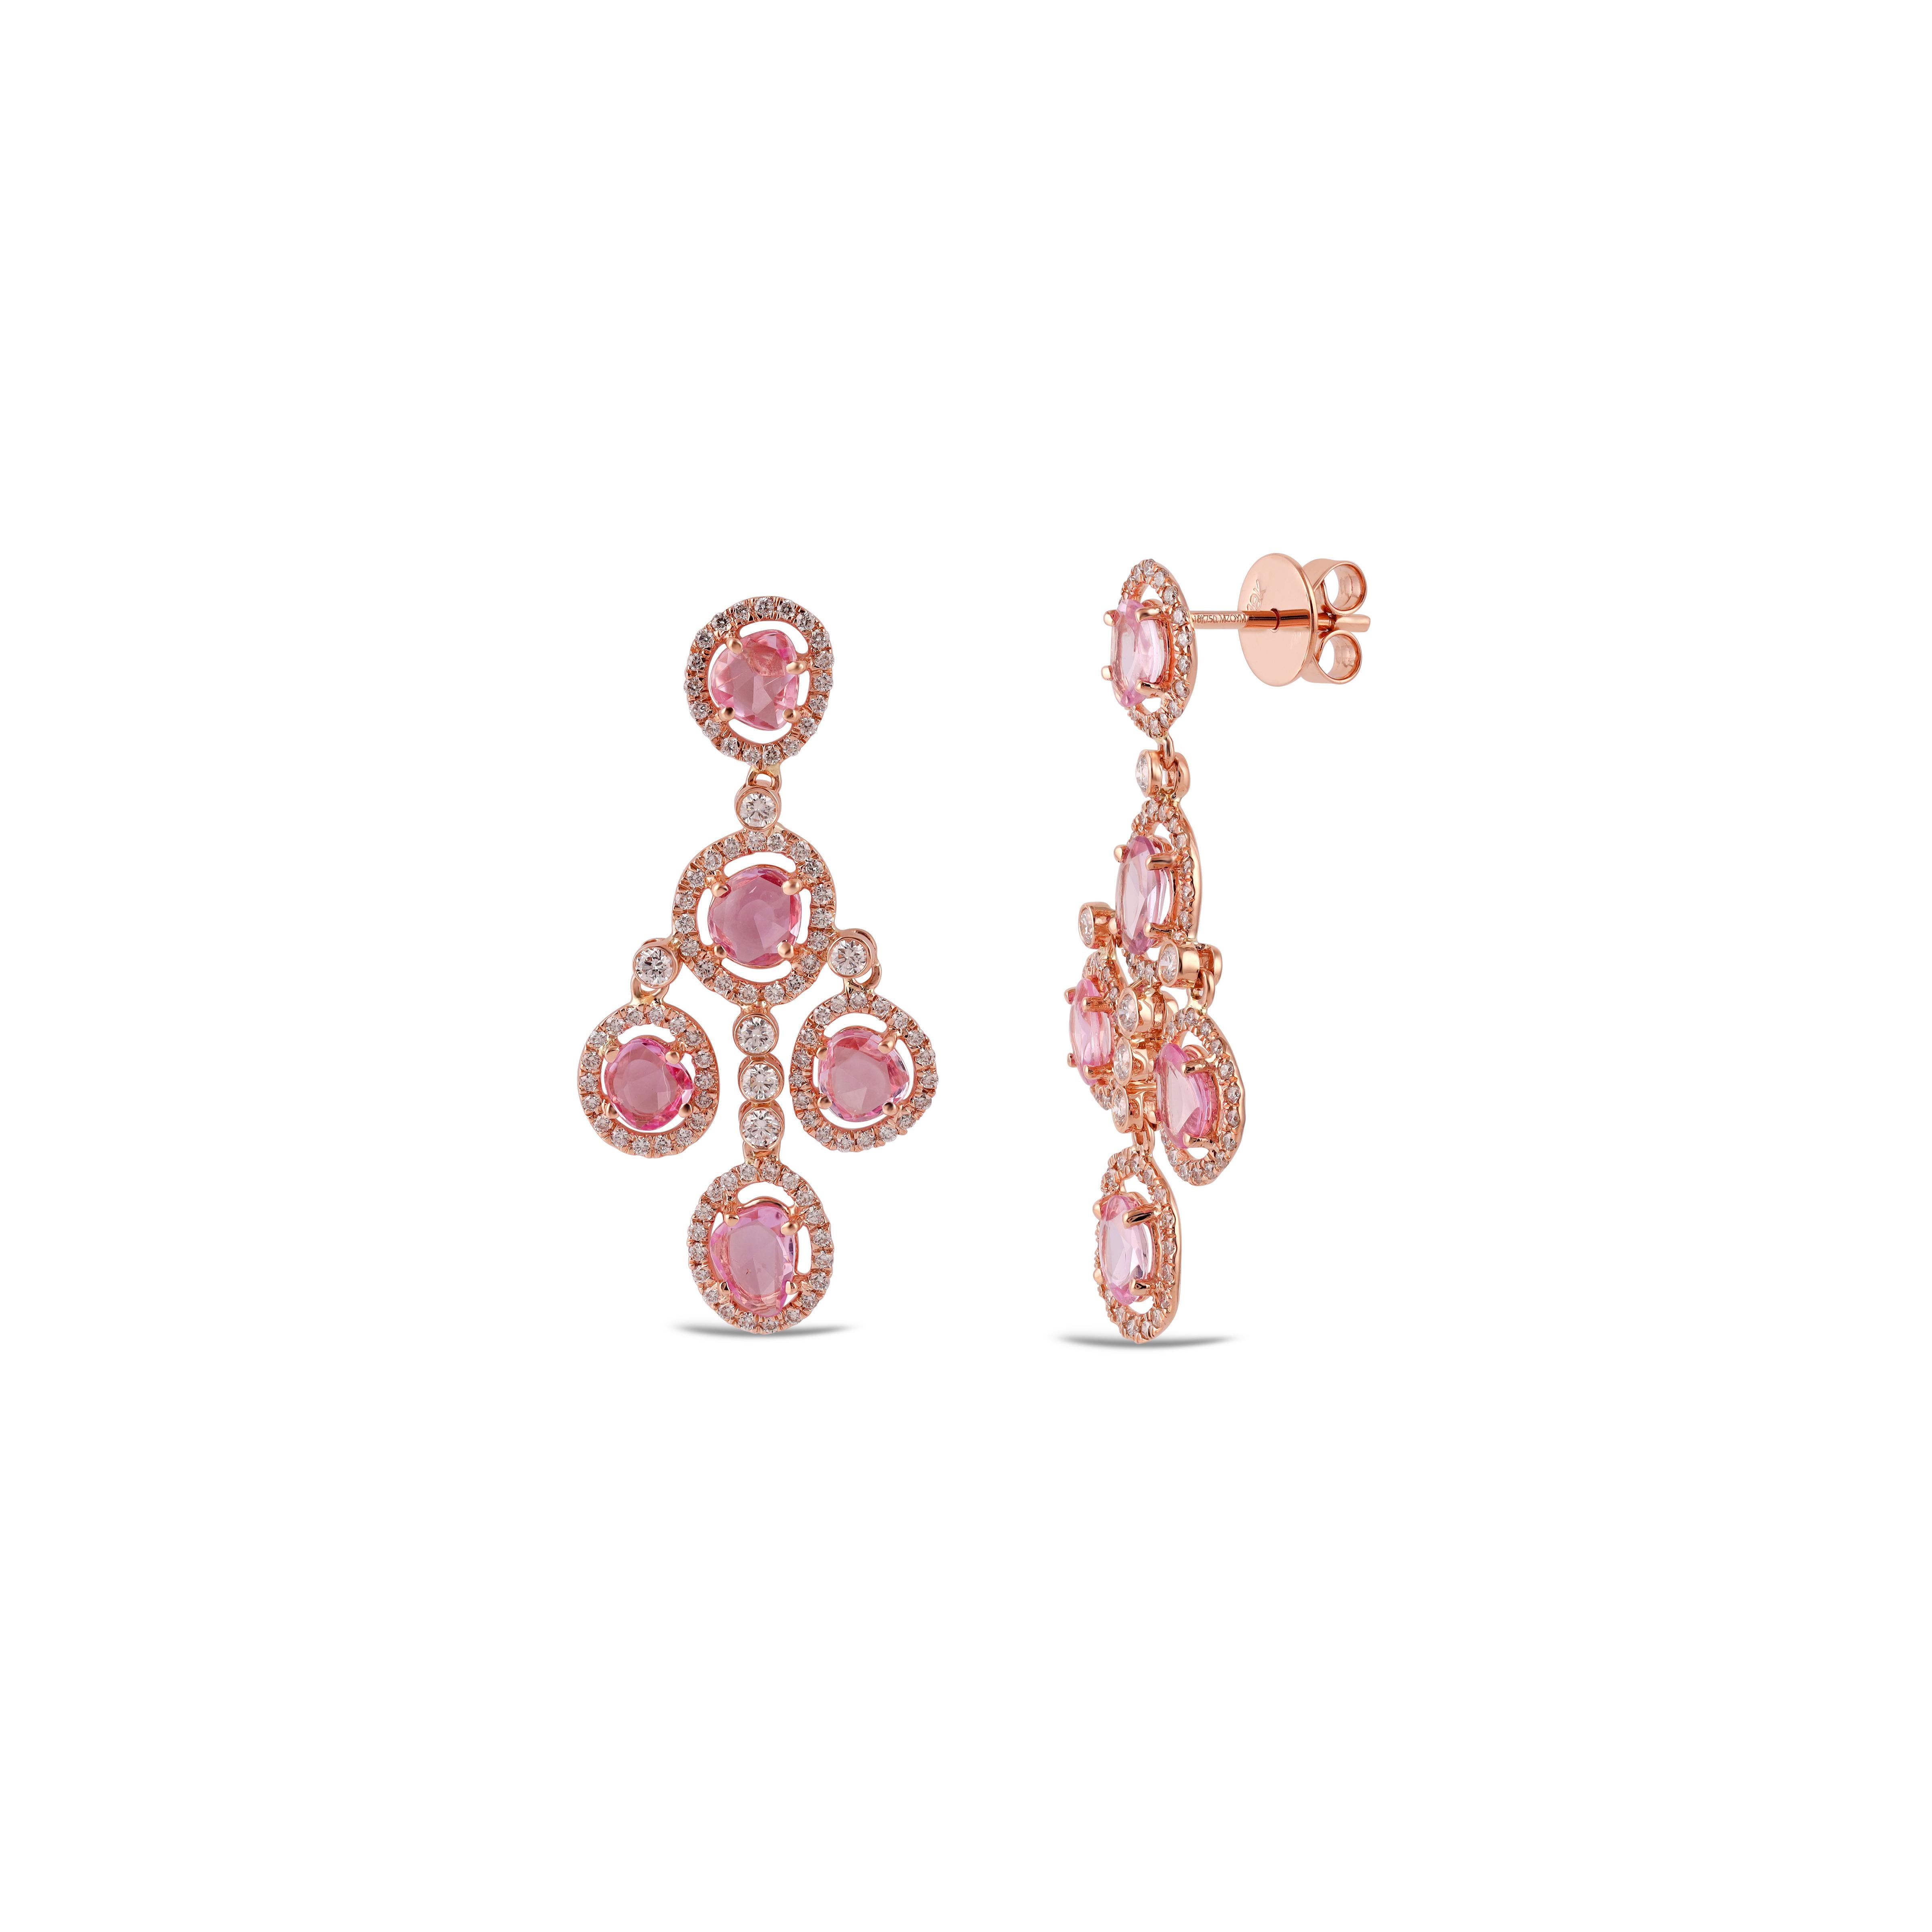 Rose Cut 4.23 Carat Pink Sapphire & Diamond Earrings Studded in 18 Karat Rose Gold For Sale